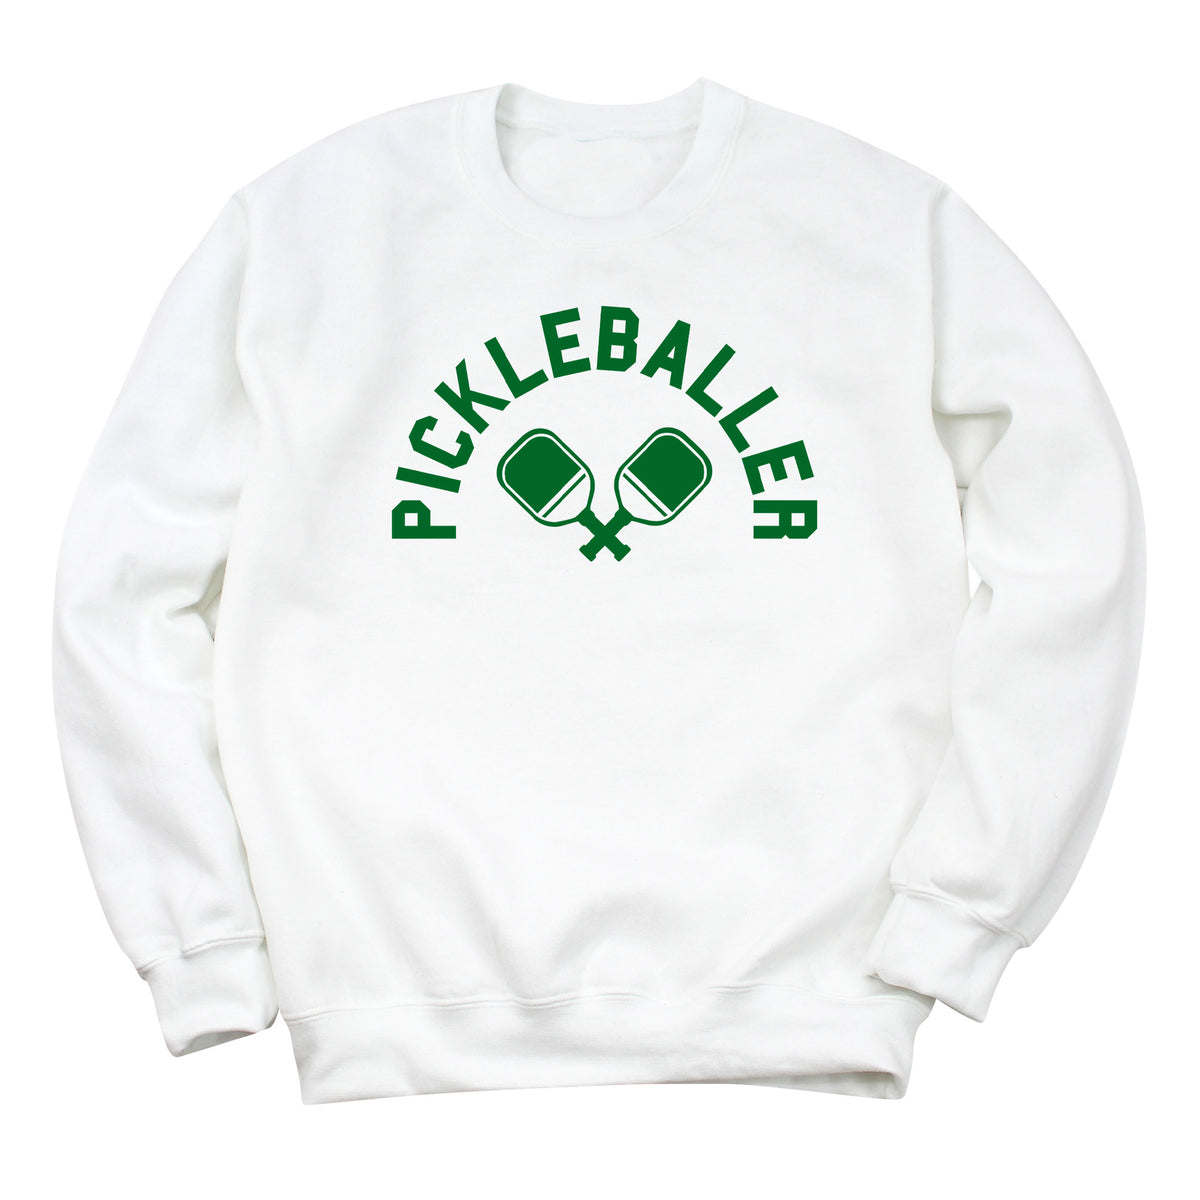 Pickleballer with Paddles Sweatshirt (GREEN INK)